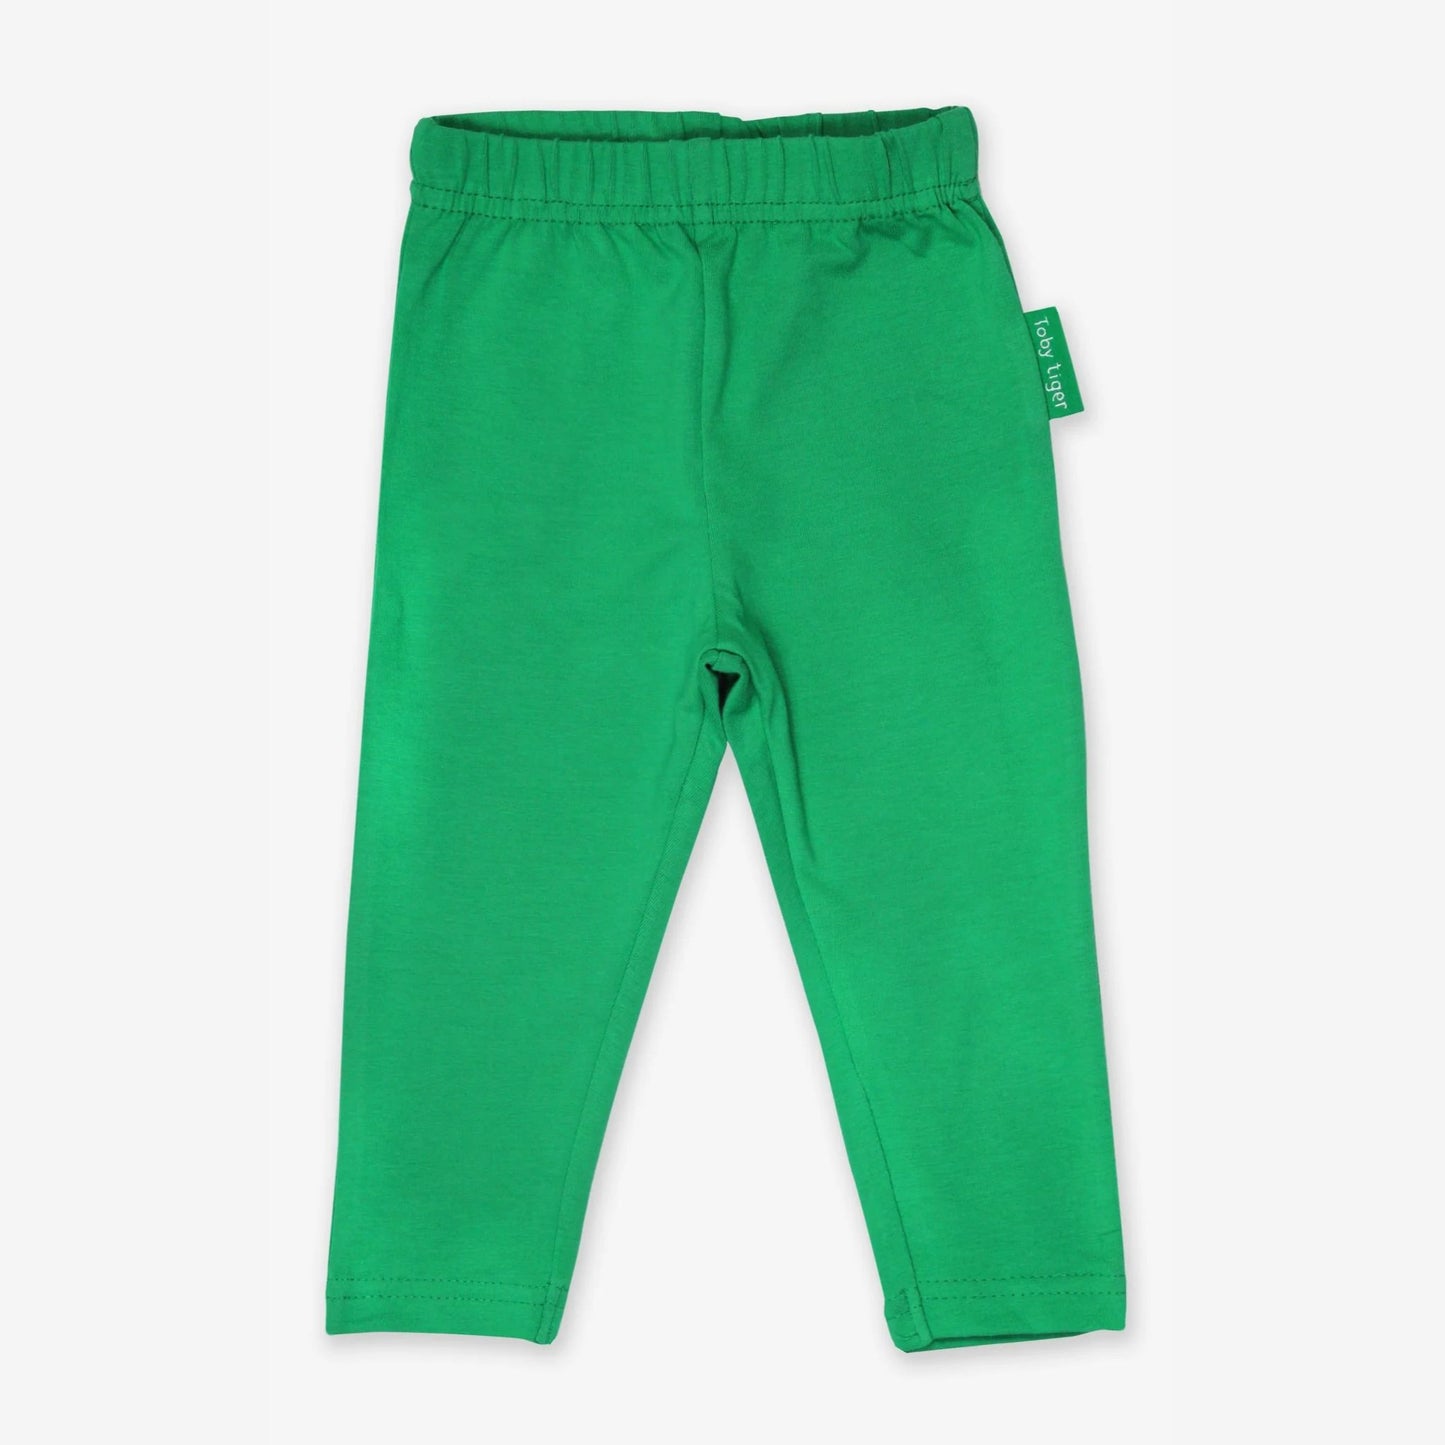 Toby Tiger leggings - green